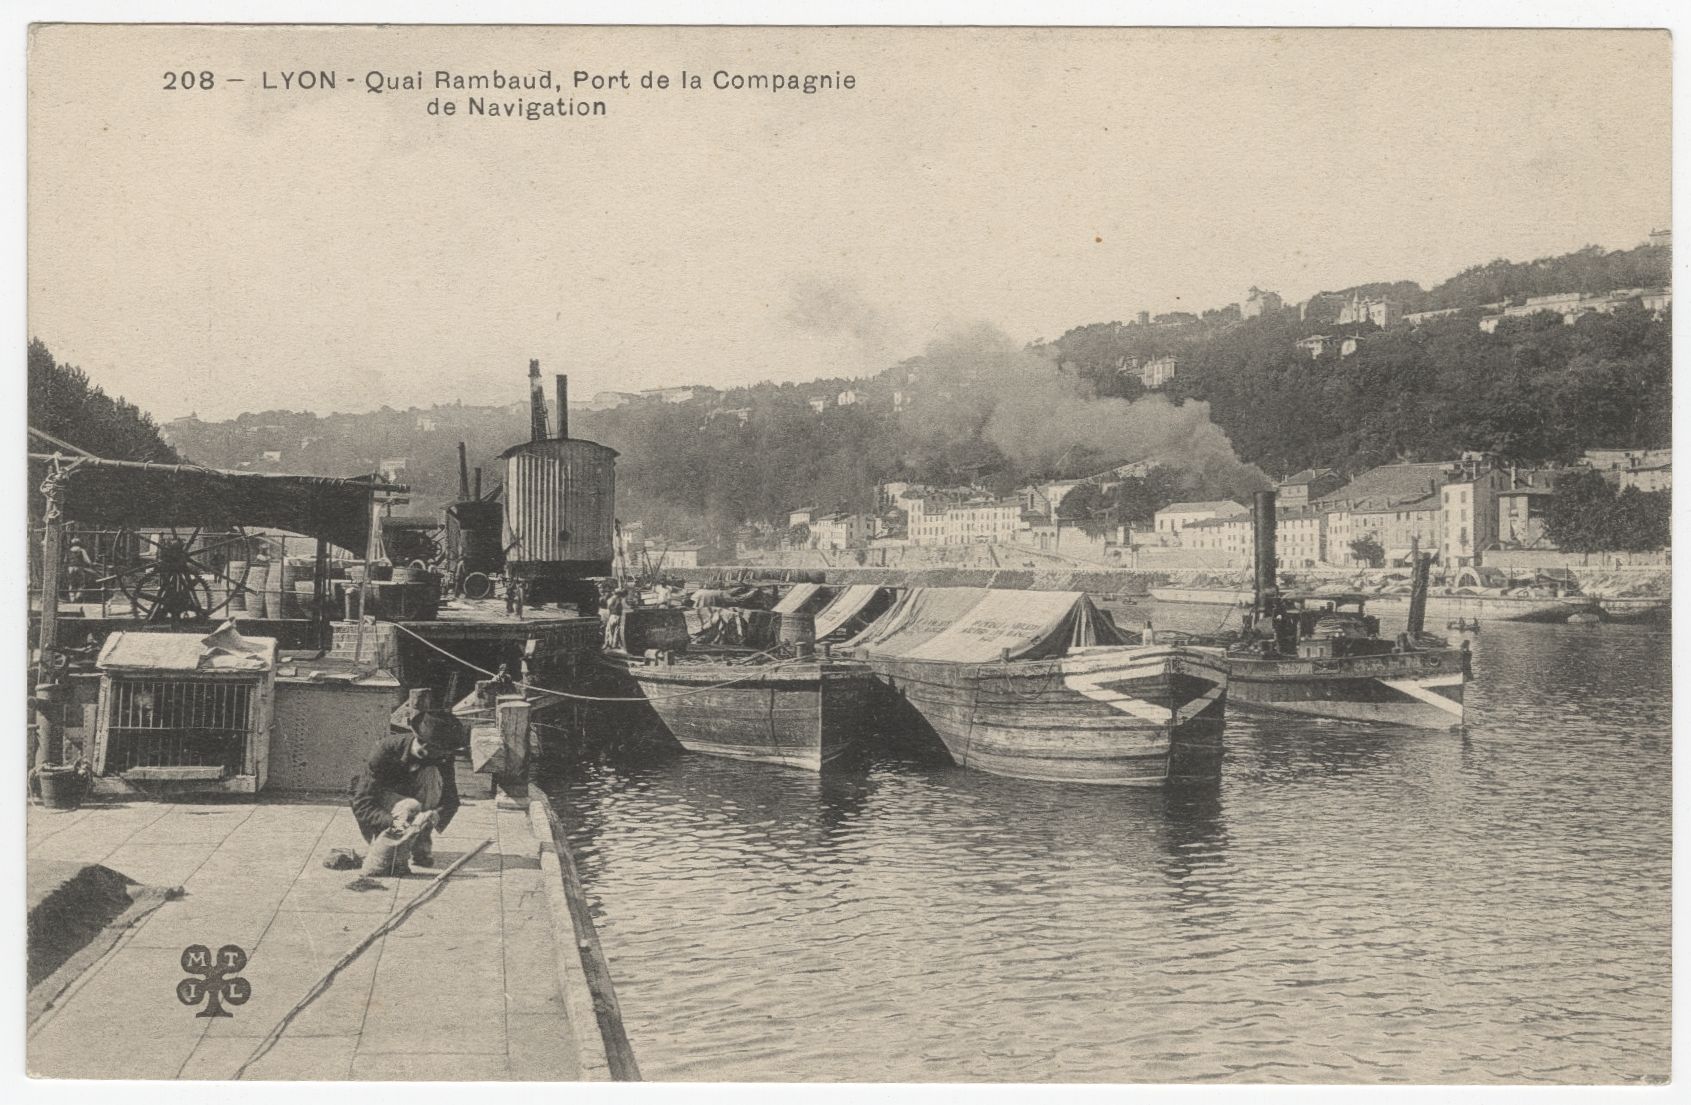 Quai Rambaud, port de la compagnie de navigation : carte postale (vers 1910, cote : 4FI/3405)